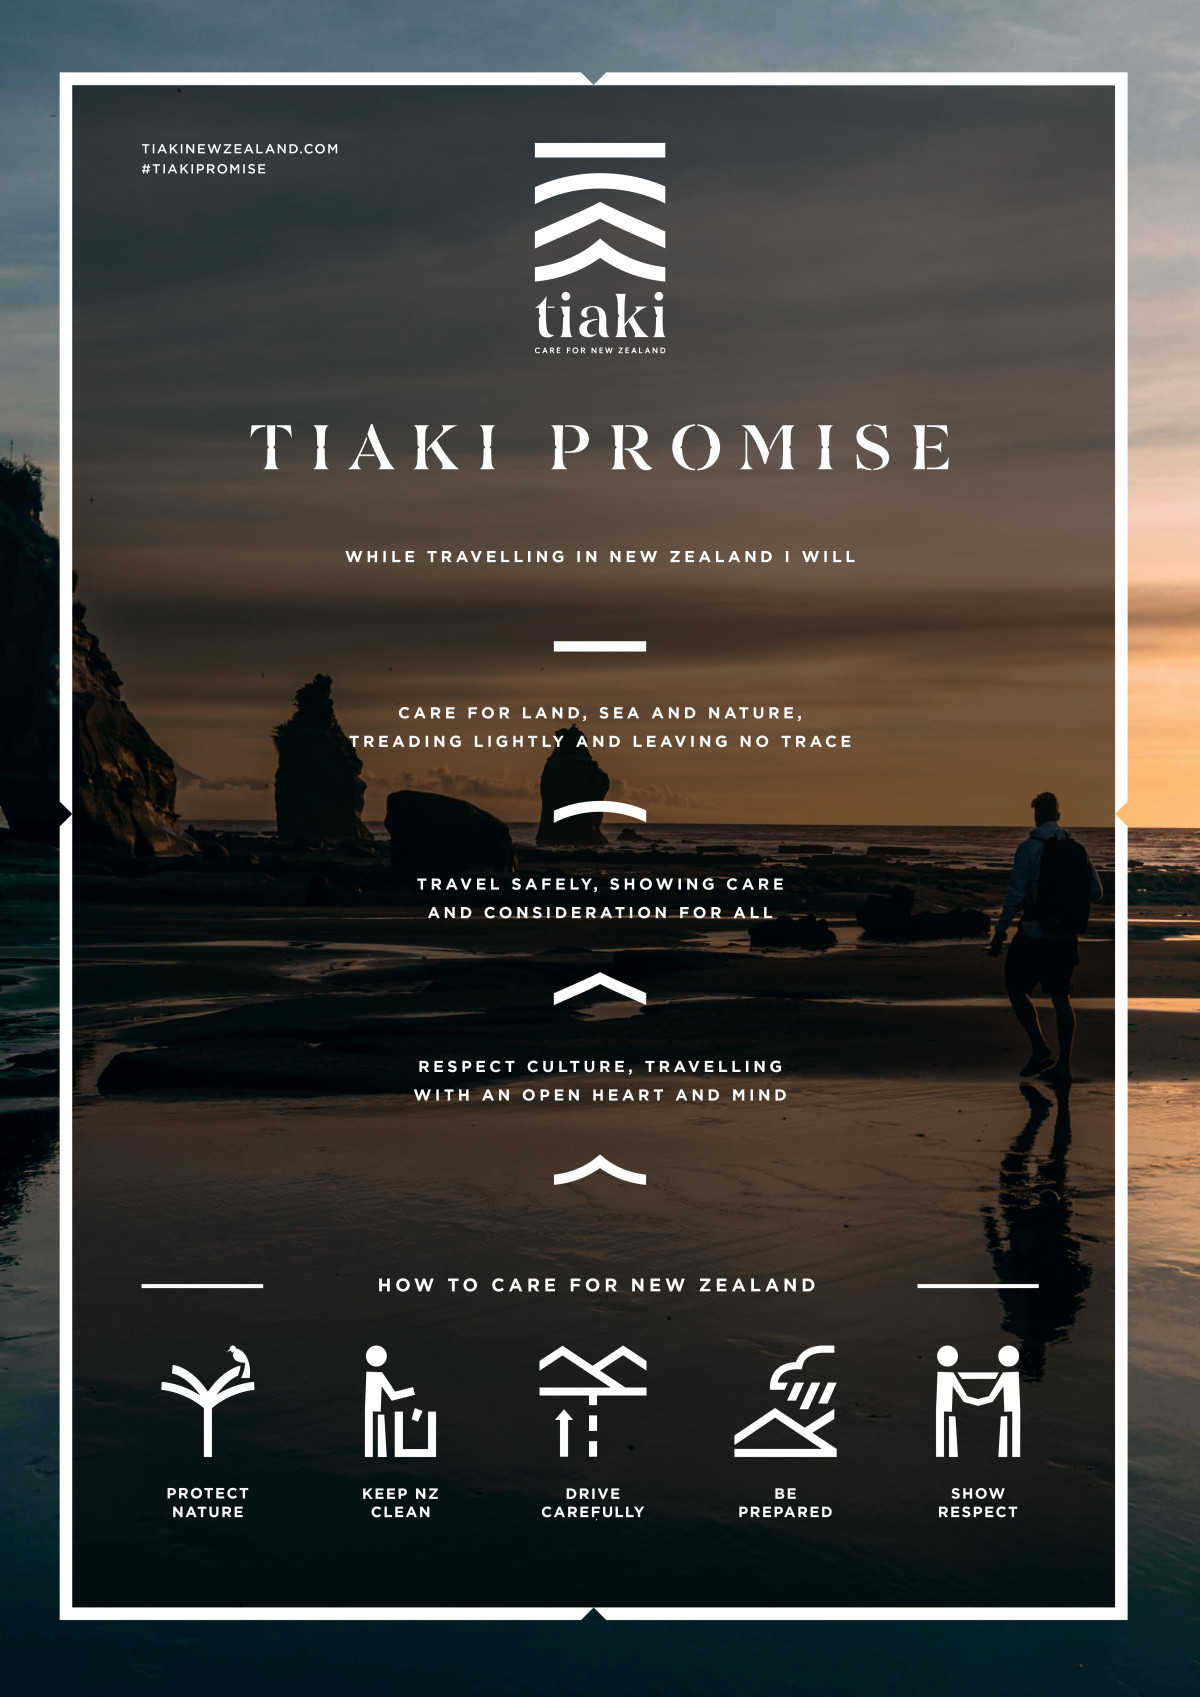 tiaka promise bella vista new plymouth